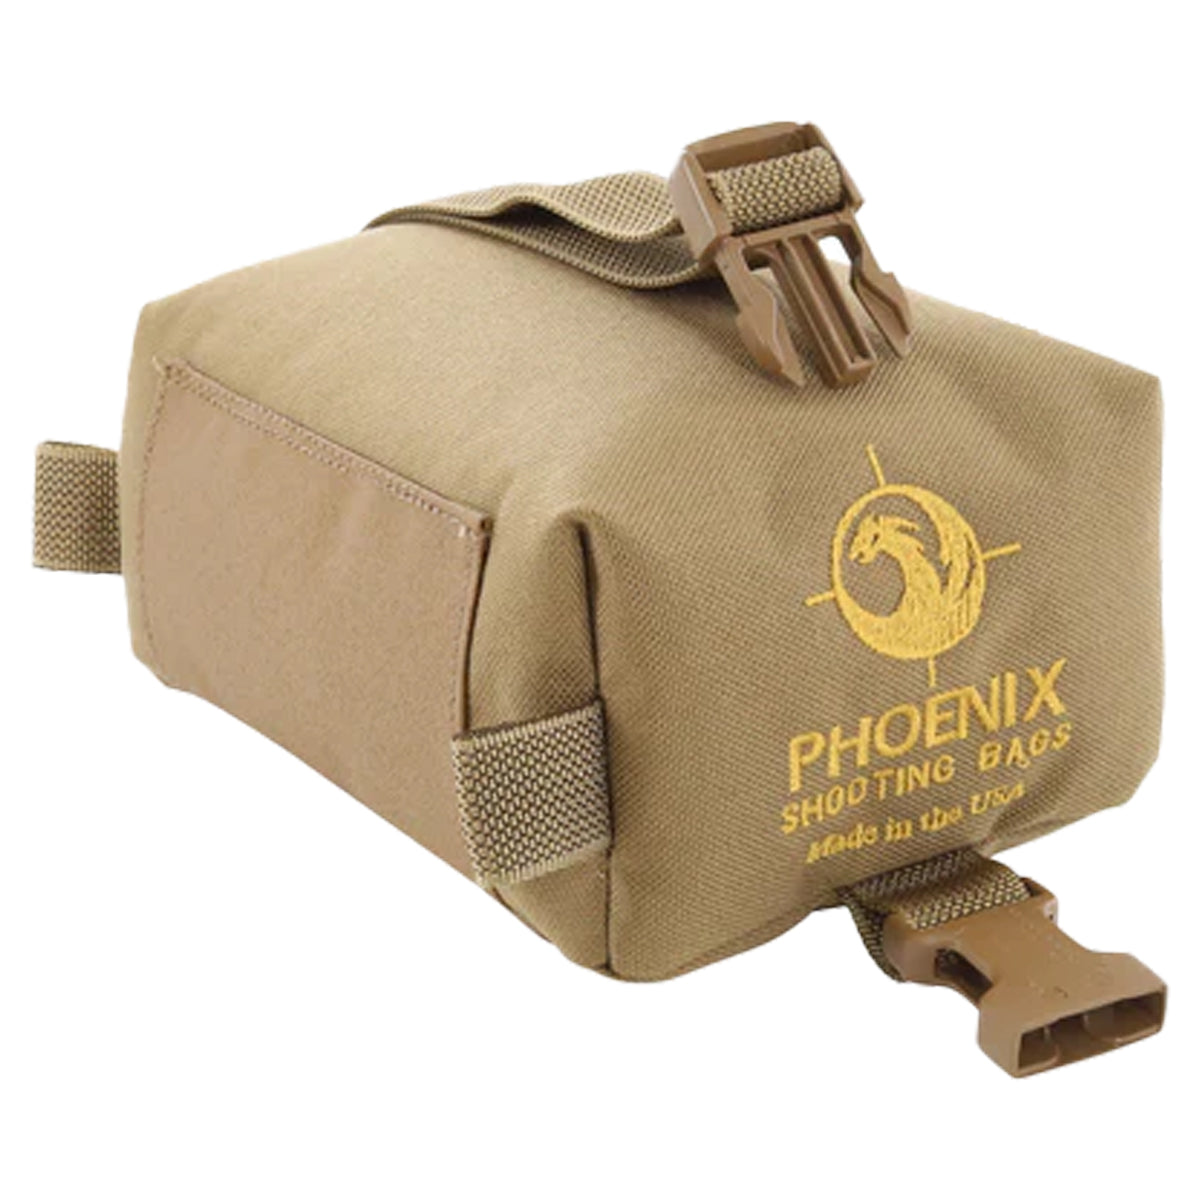 Phoenix Shooting Bags X-Small Rear Bag in Coyote by GOHUNT | Phoenix Shooting Bags - GOHUNT Shop